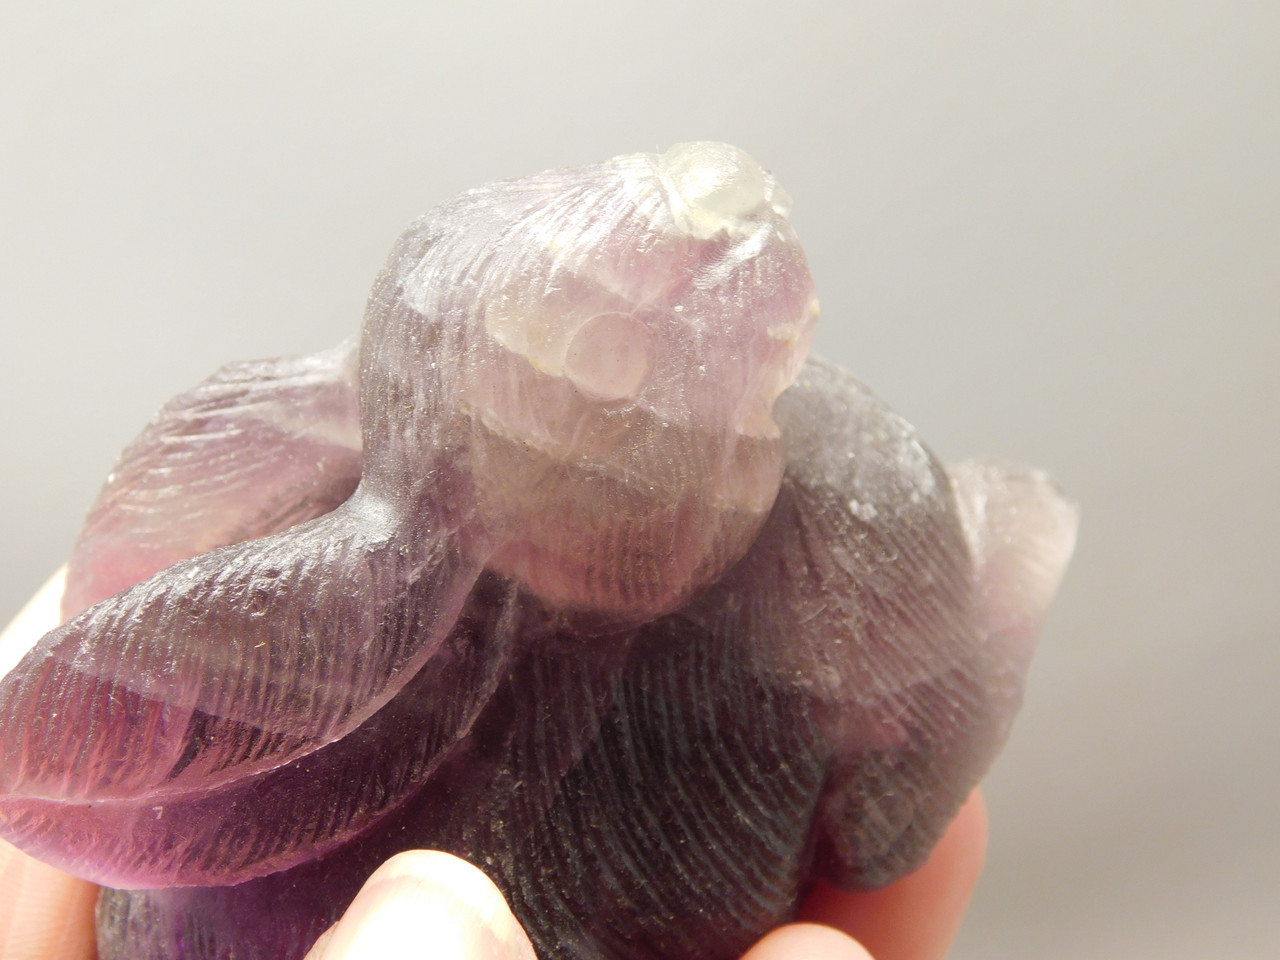 Rabbit Figurine Gemstone Animal Carving Purple Fluorite #O104